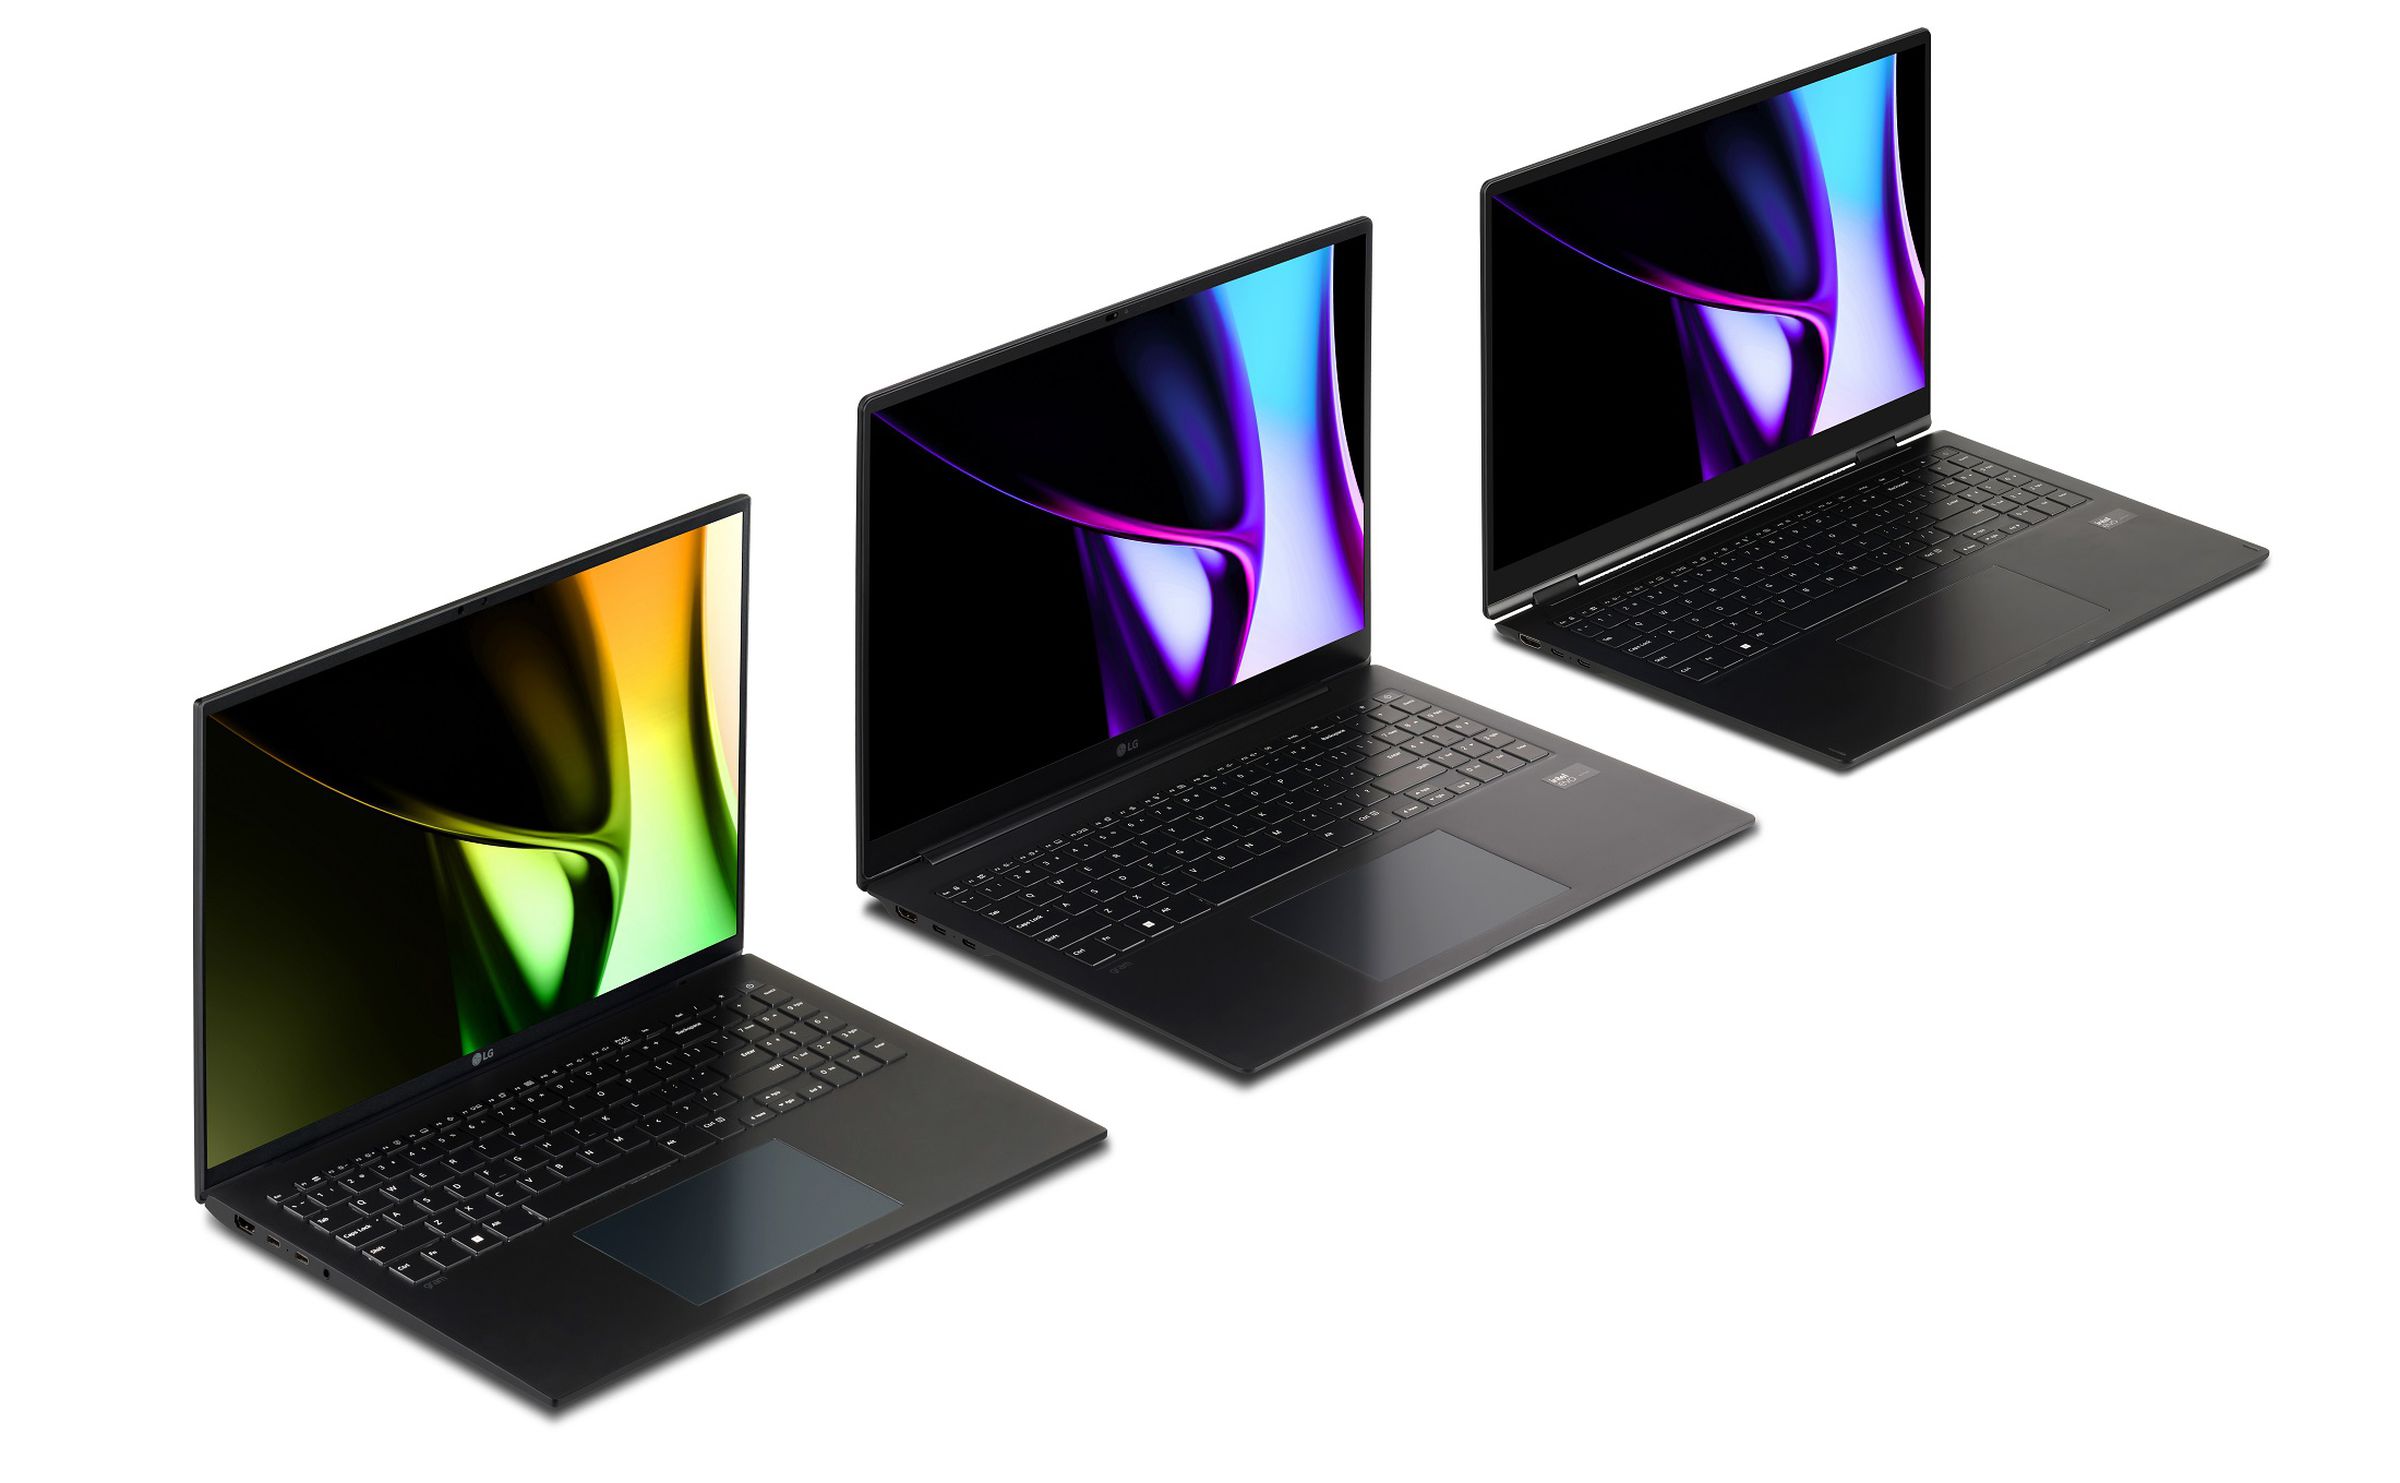 Three laptops on a white background